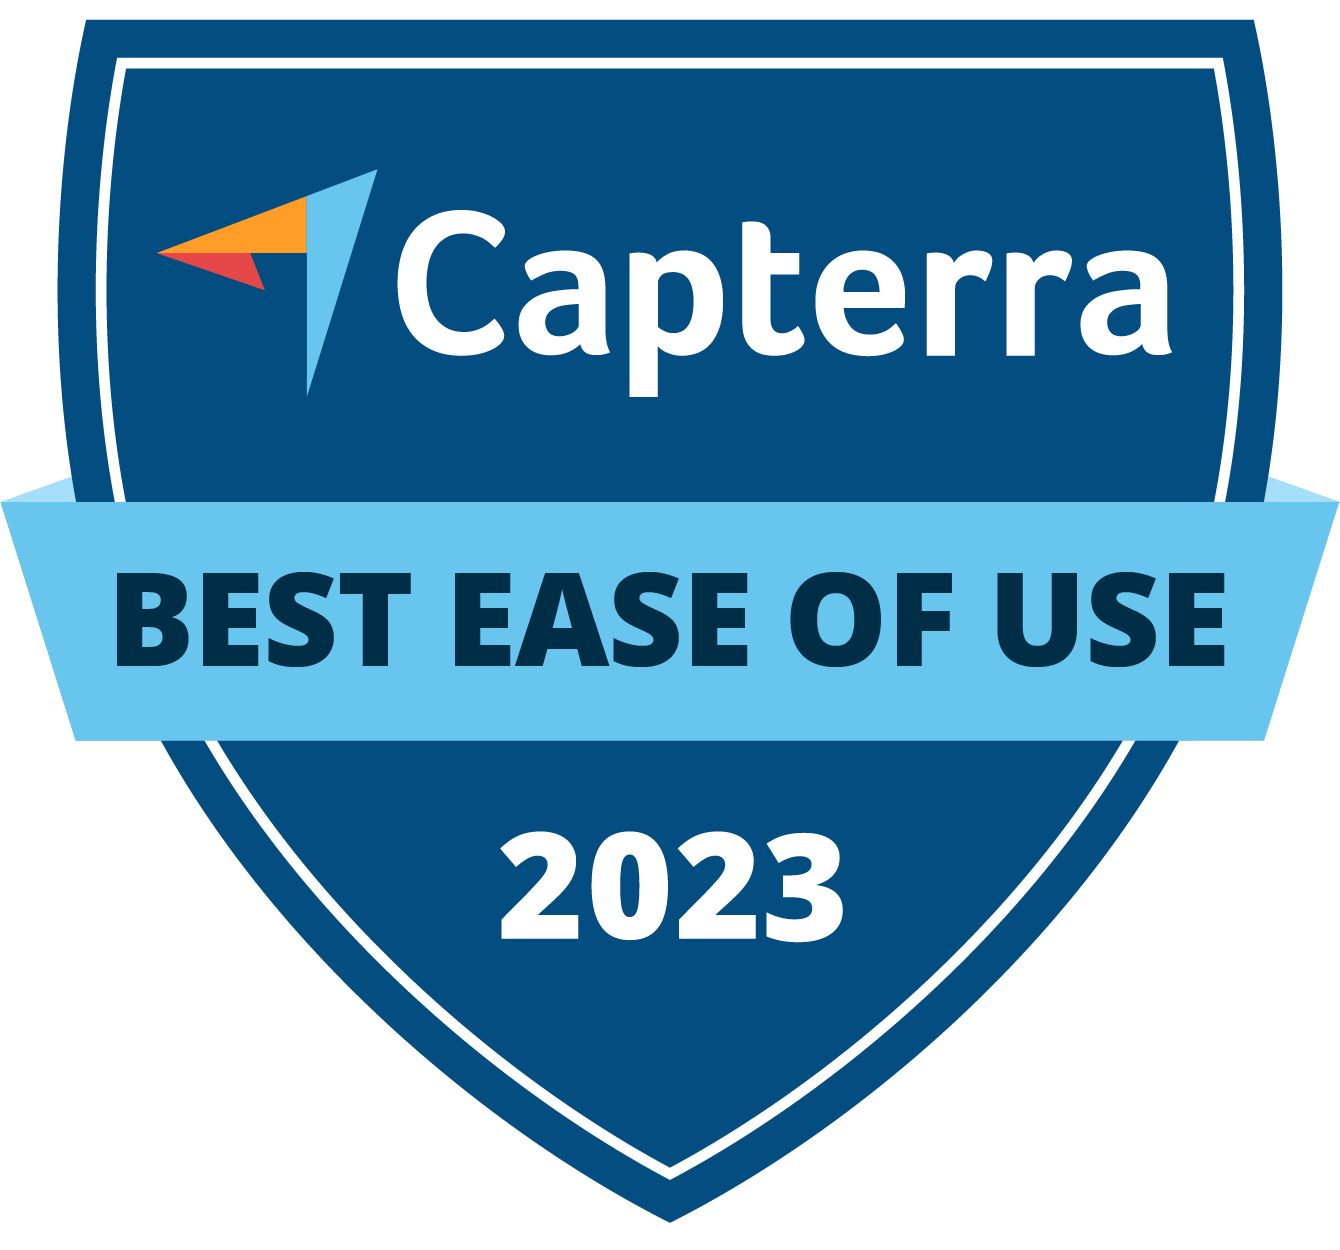 G2 Capterra - Best Ease Of Use